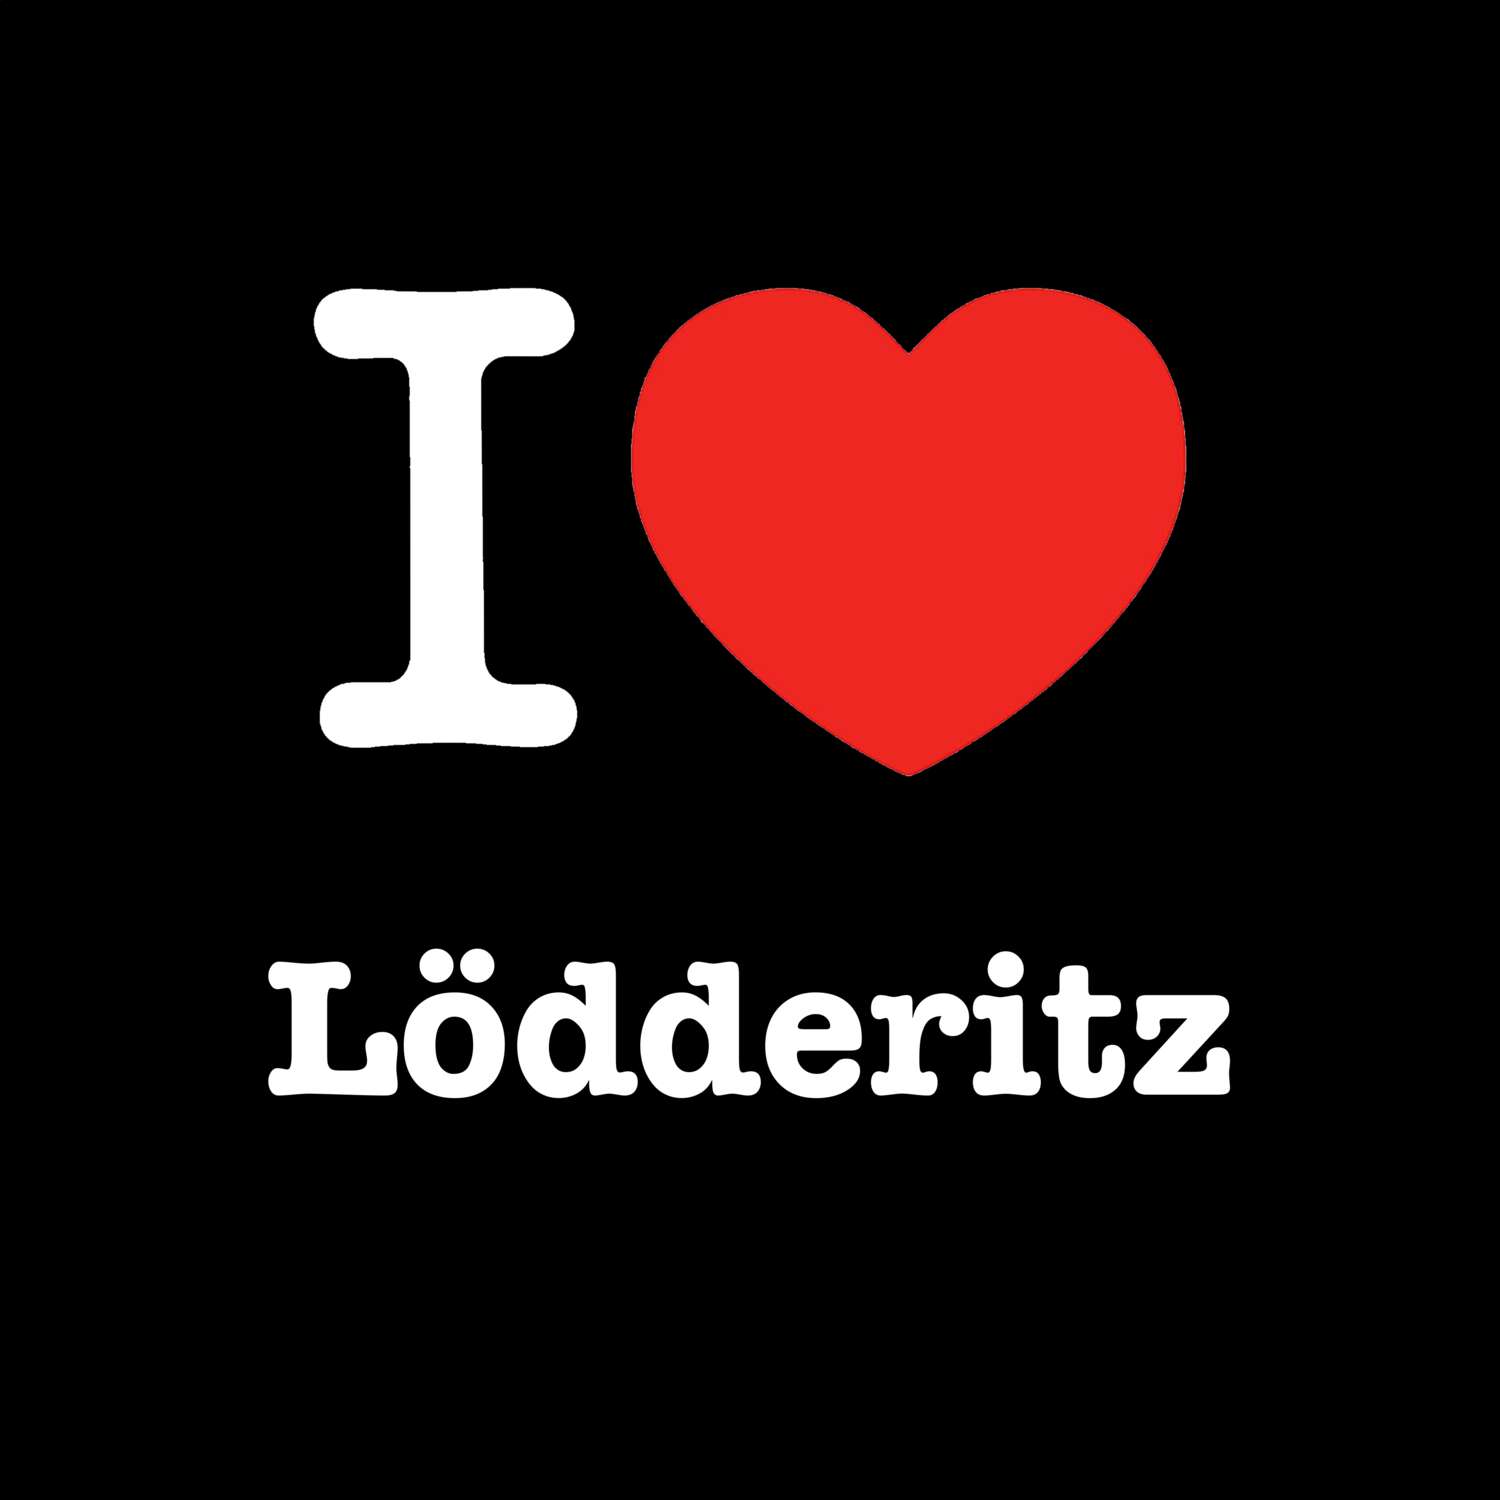 Lödderitz T-Shirt »I love«